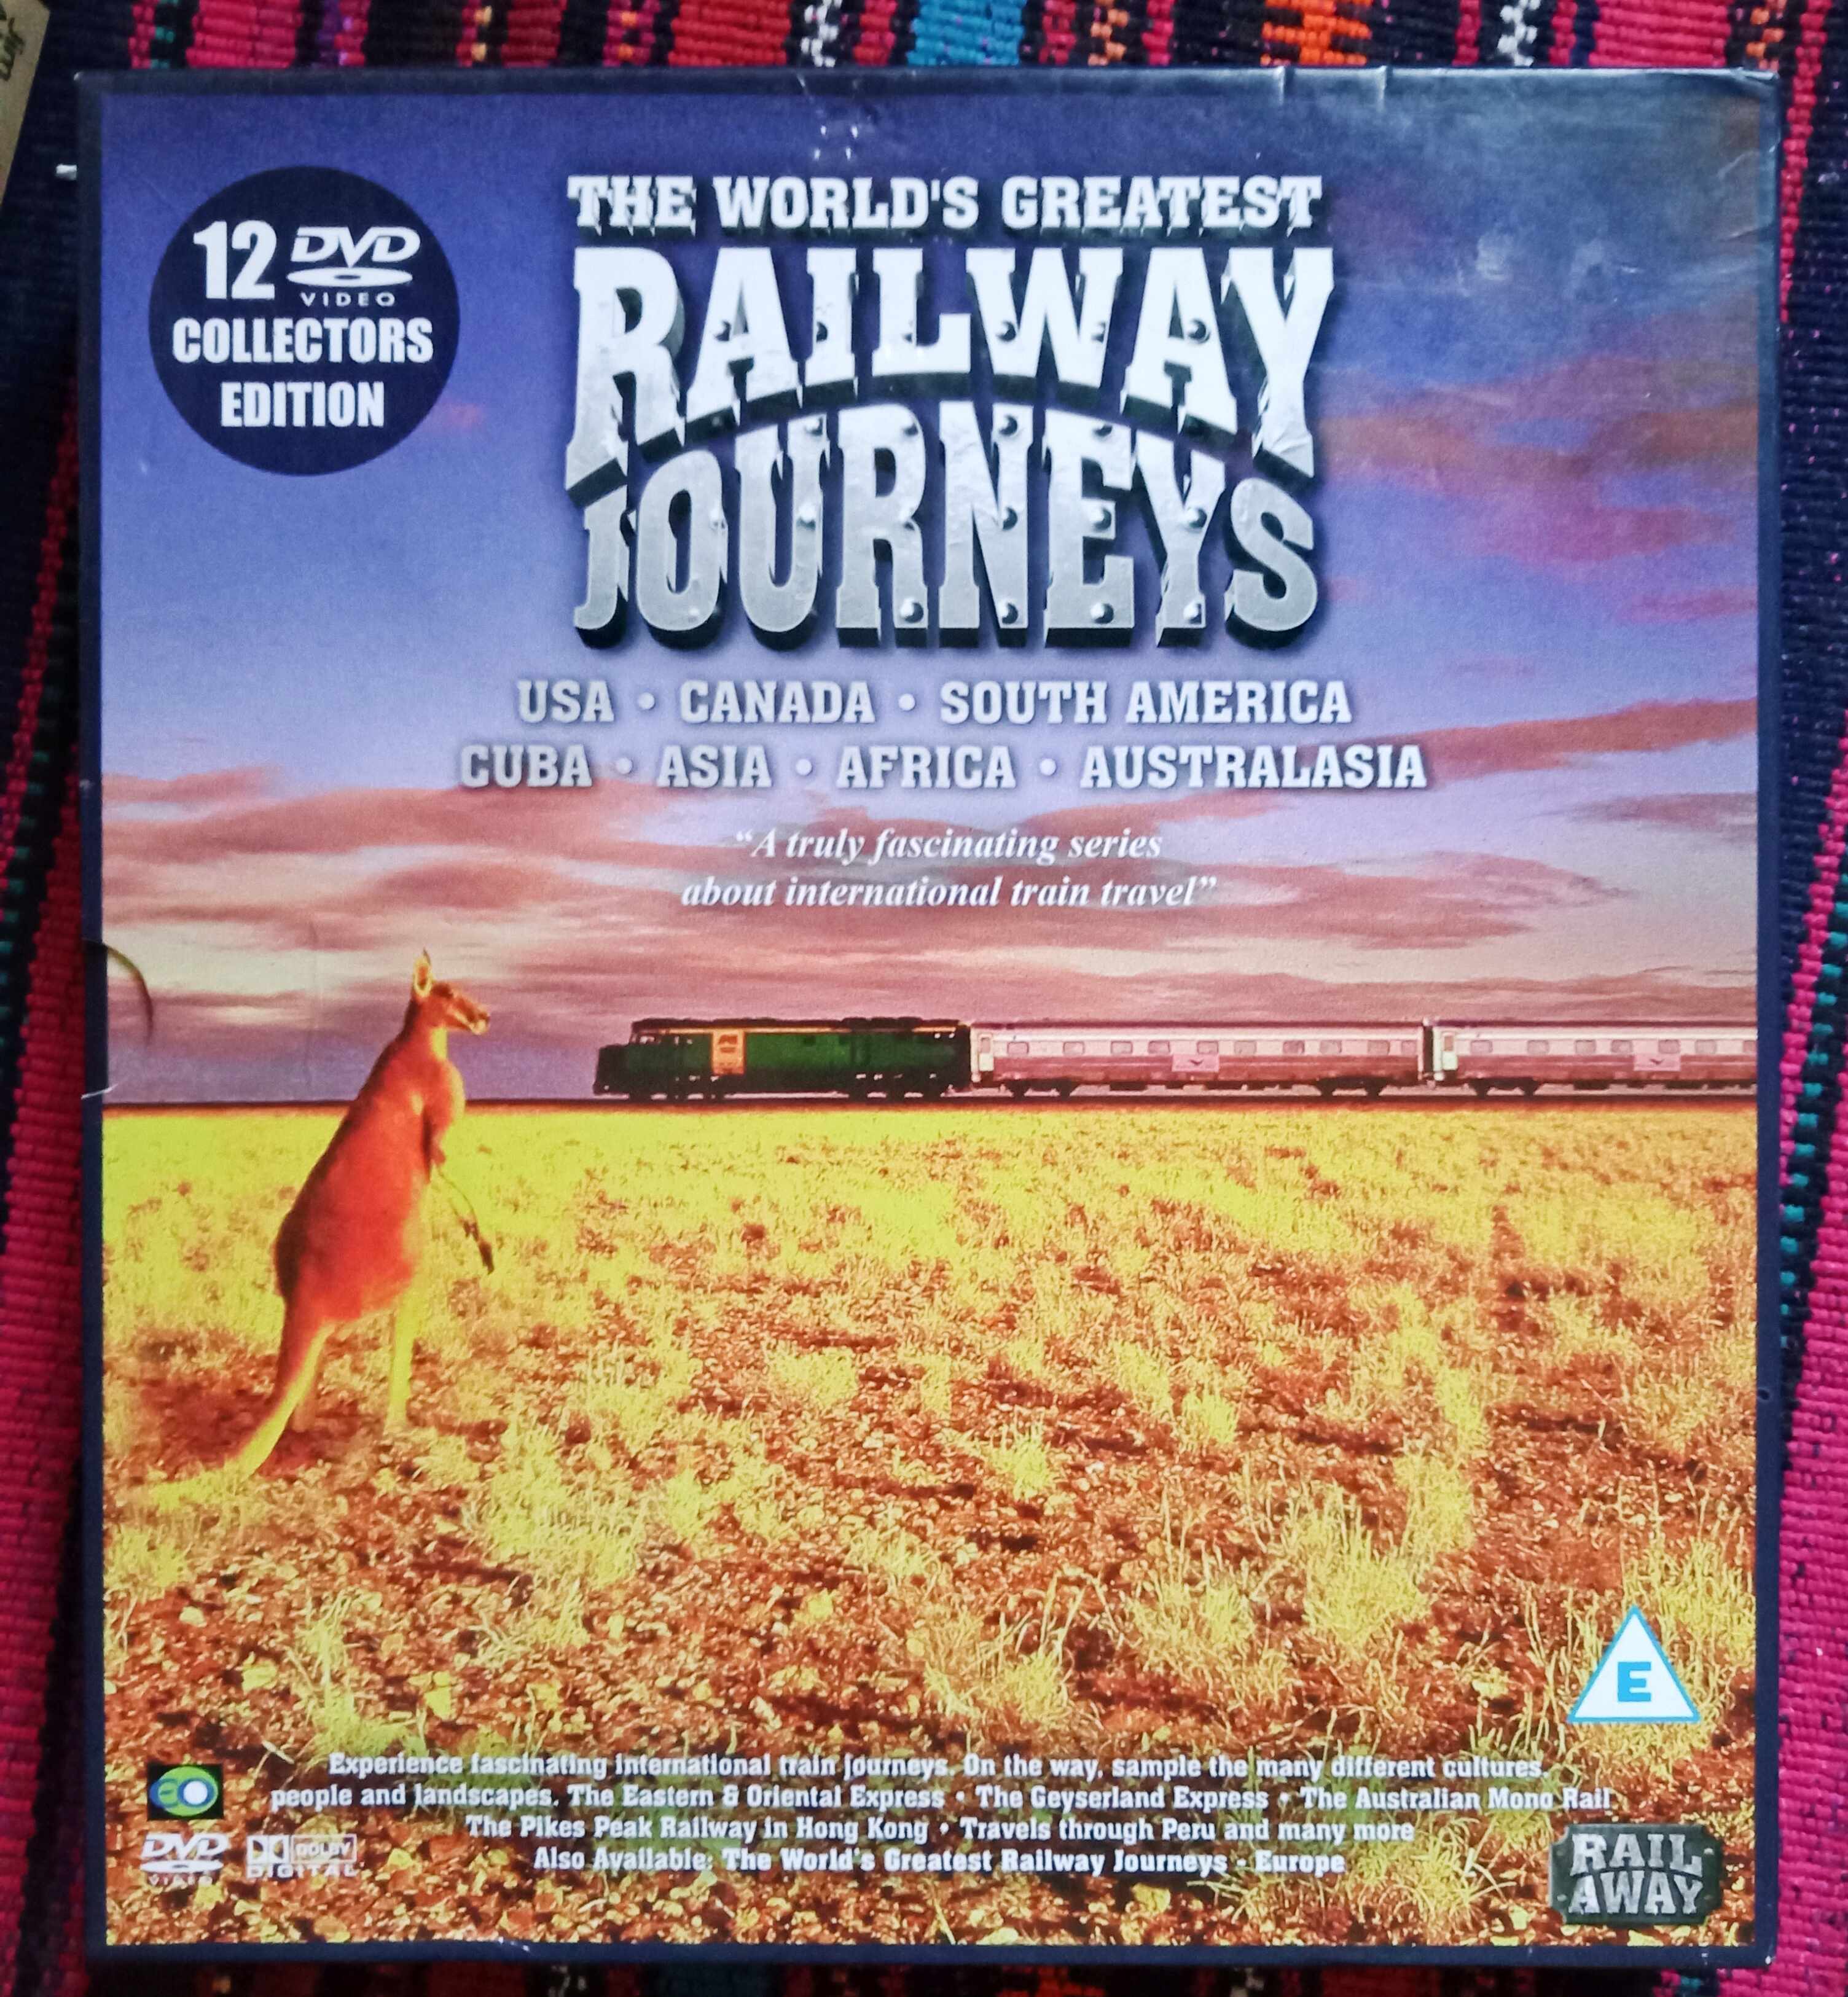 the world's greatest railway journeys 12 dvds set